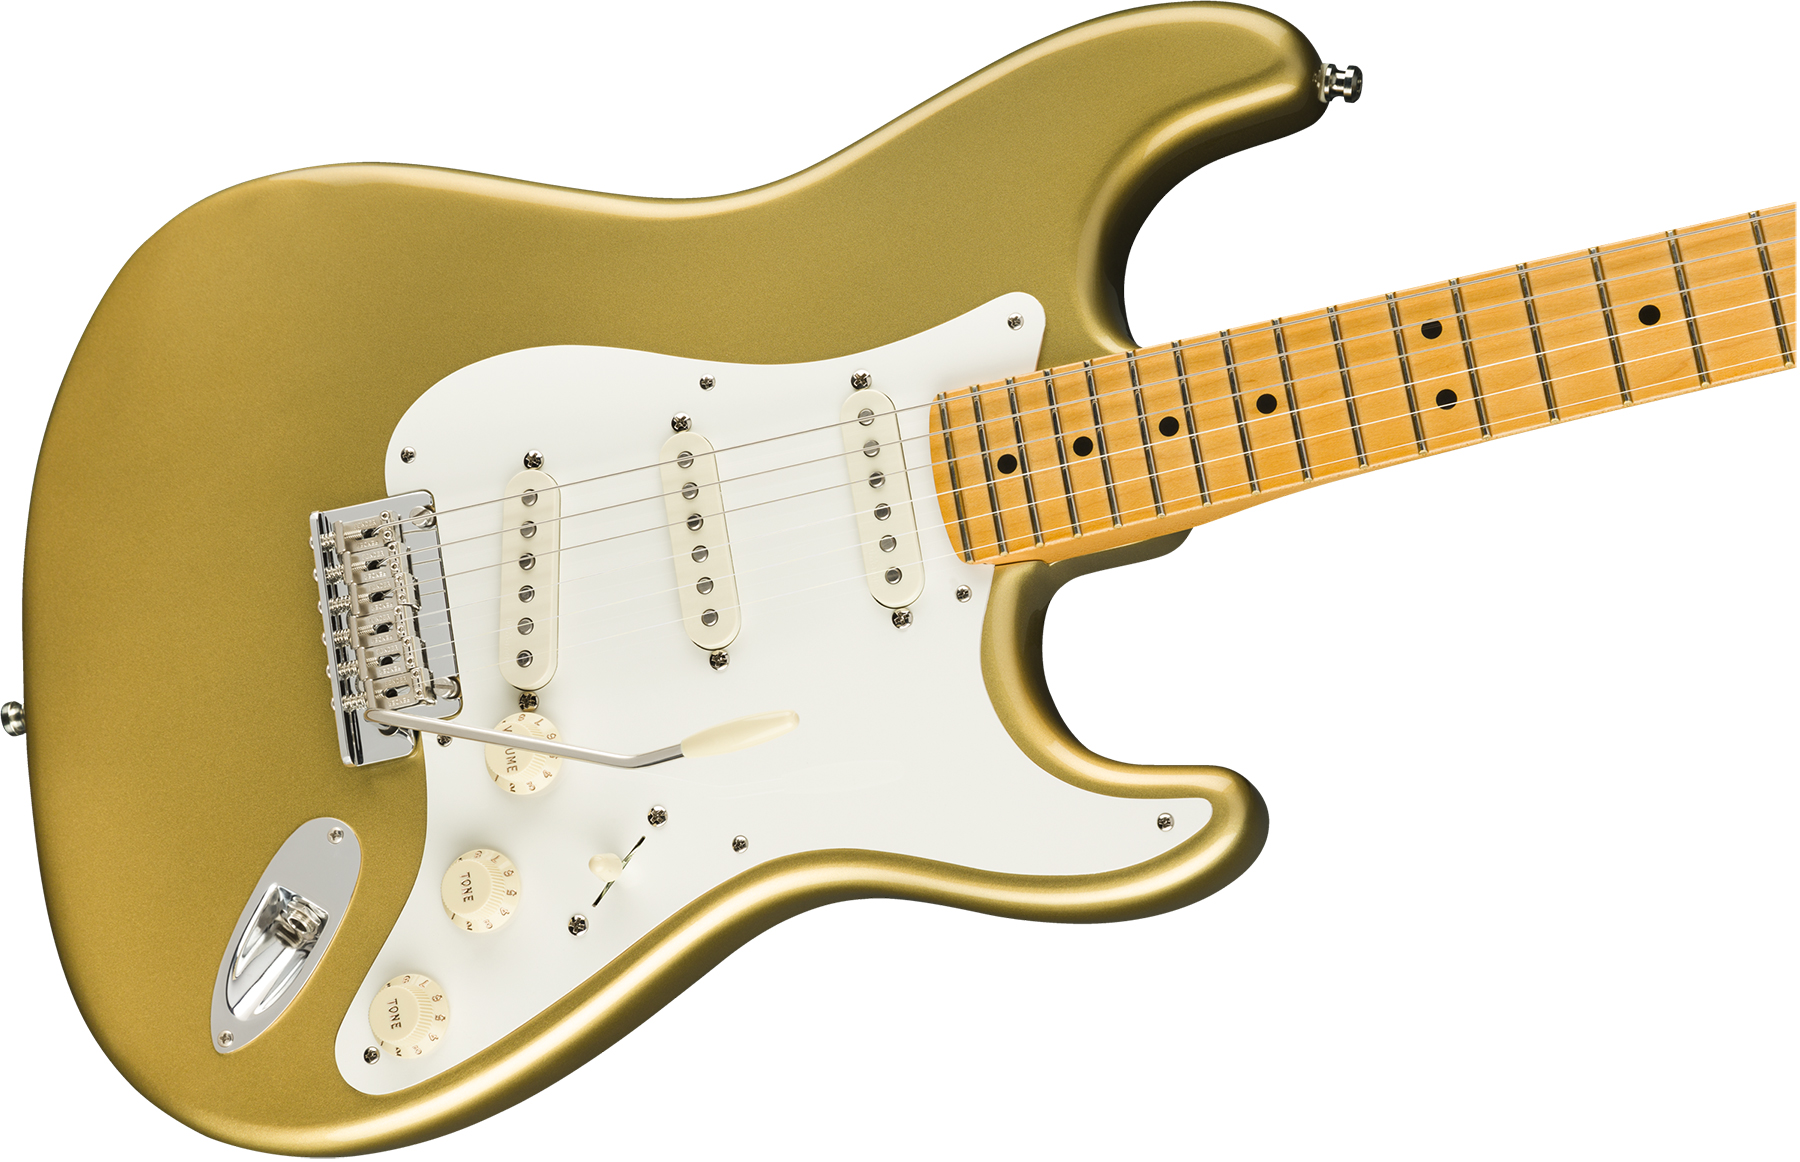 Fender Strat Lincoln Brewster Usa Signature Mn - Aztec Gold - Str shape electric guitar - Variation 2